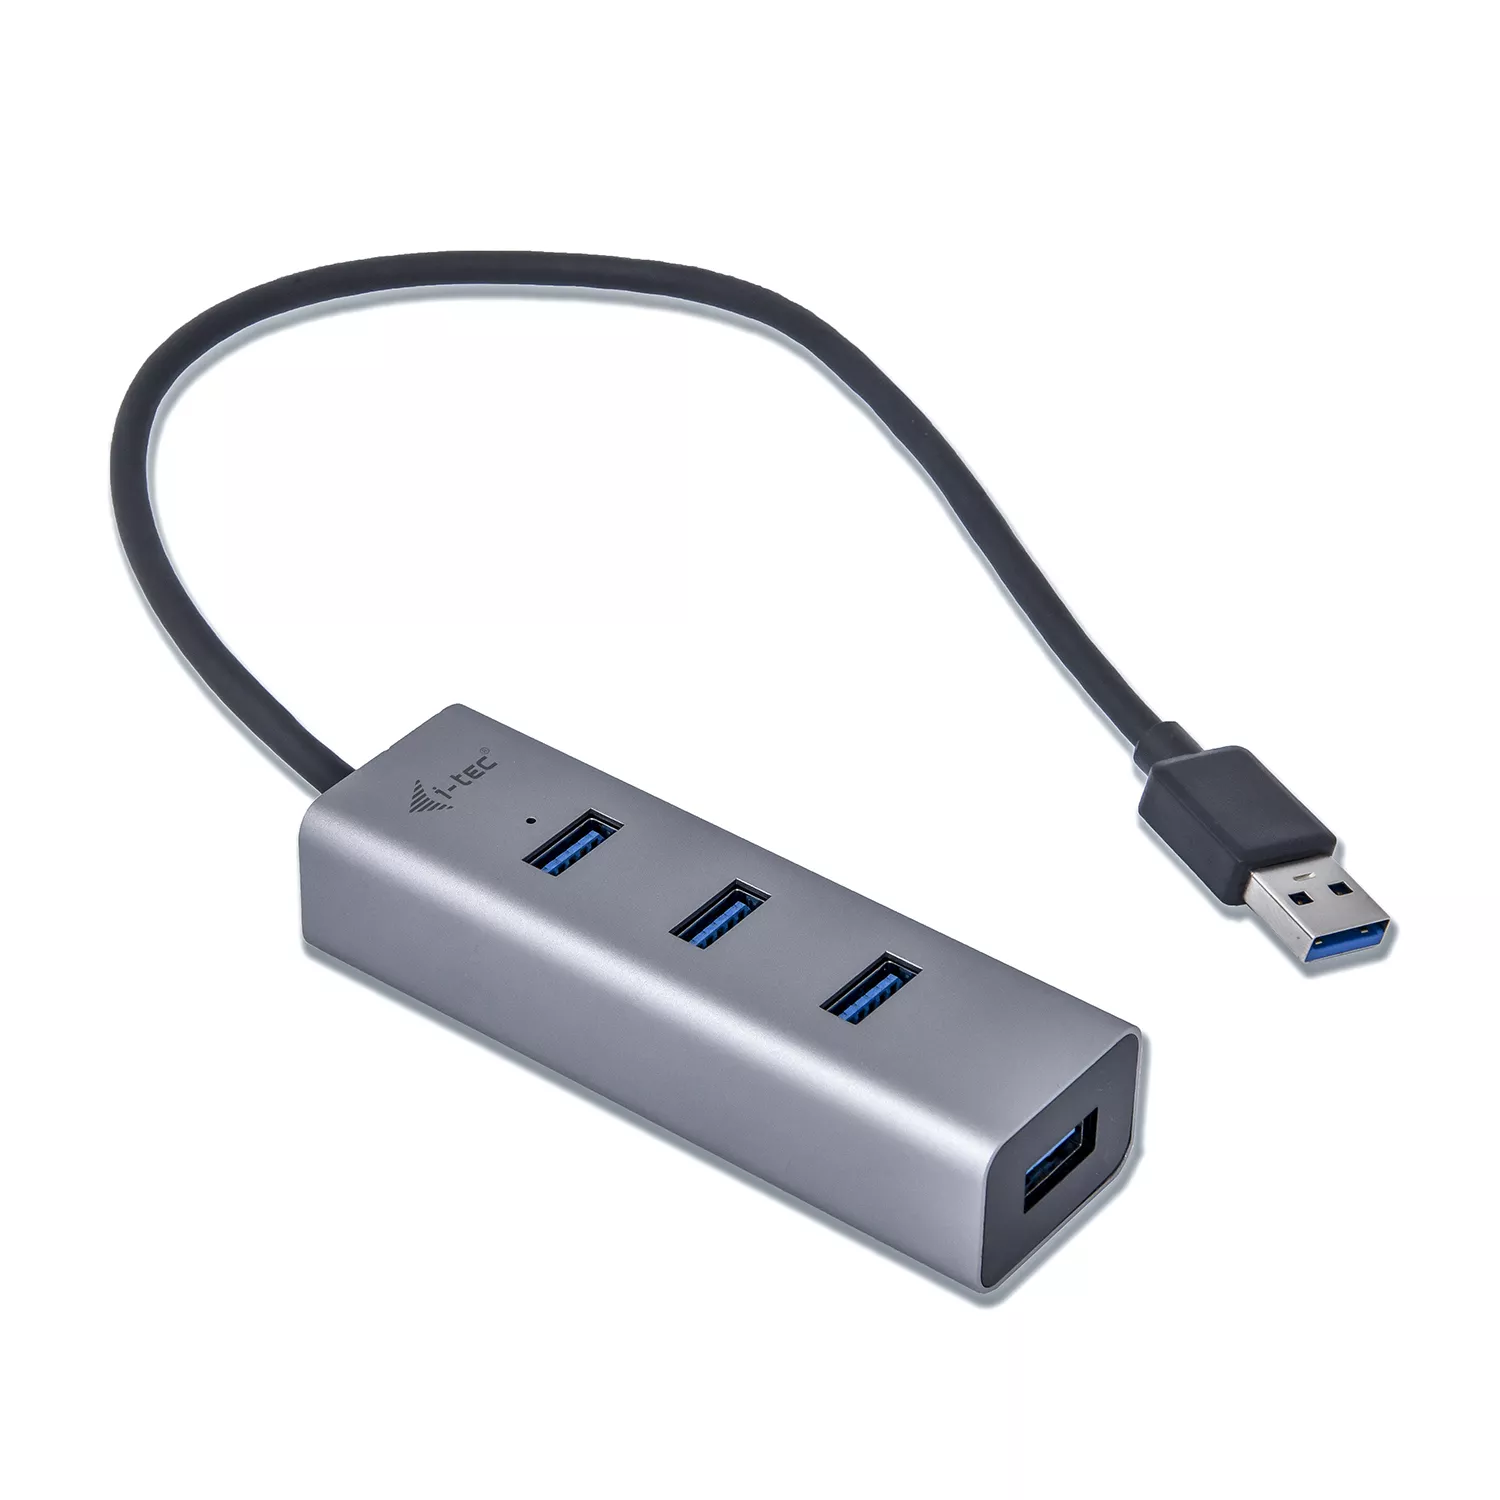 Achat I-TEC USB 3.0 Metal HUB 4 port without power adapter ideal au meilleur prix